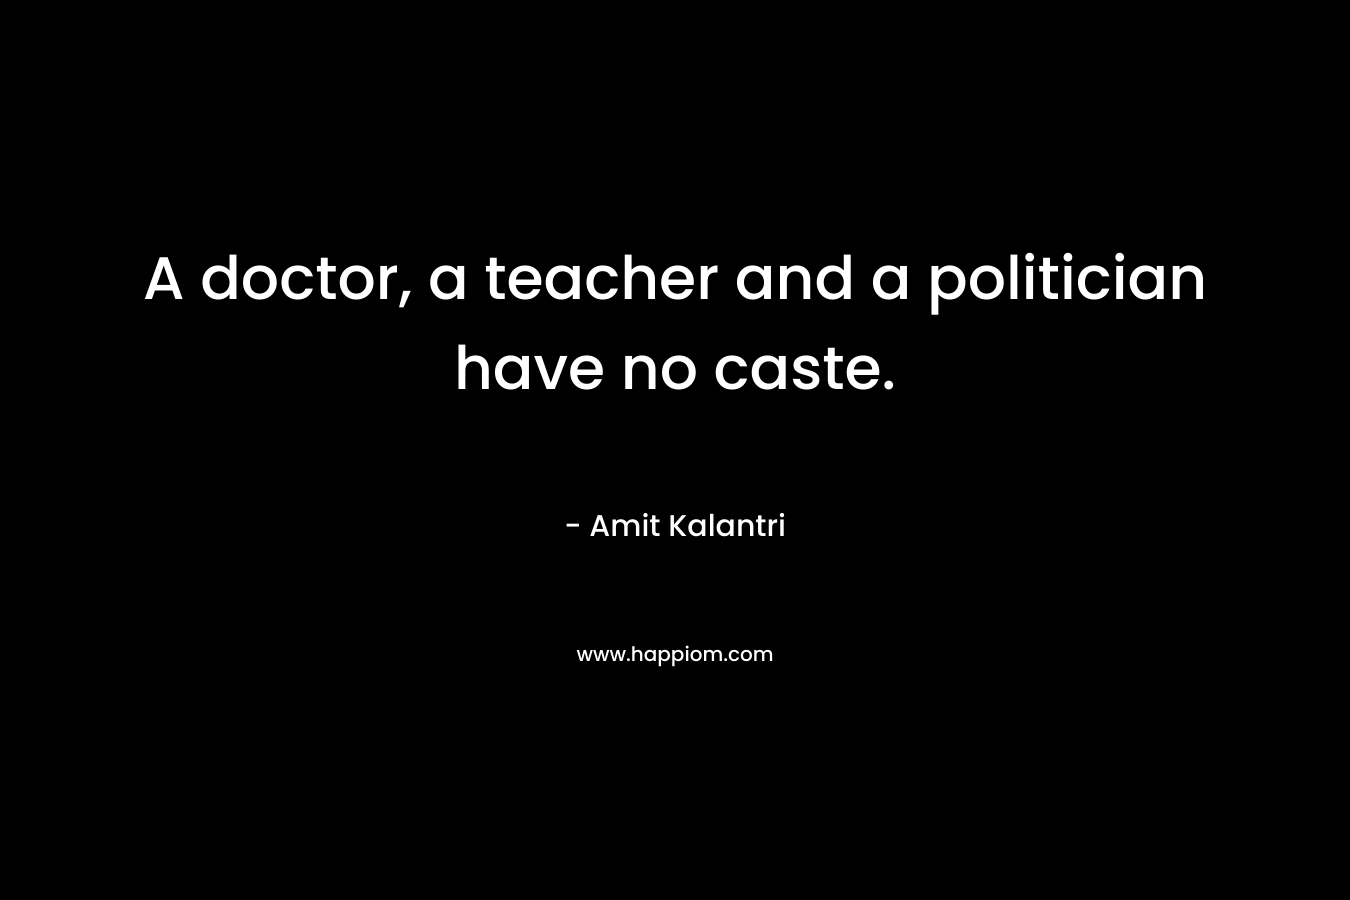 A doctor, a teacher and a politician have no caste. – Amit Kalantri